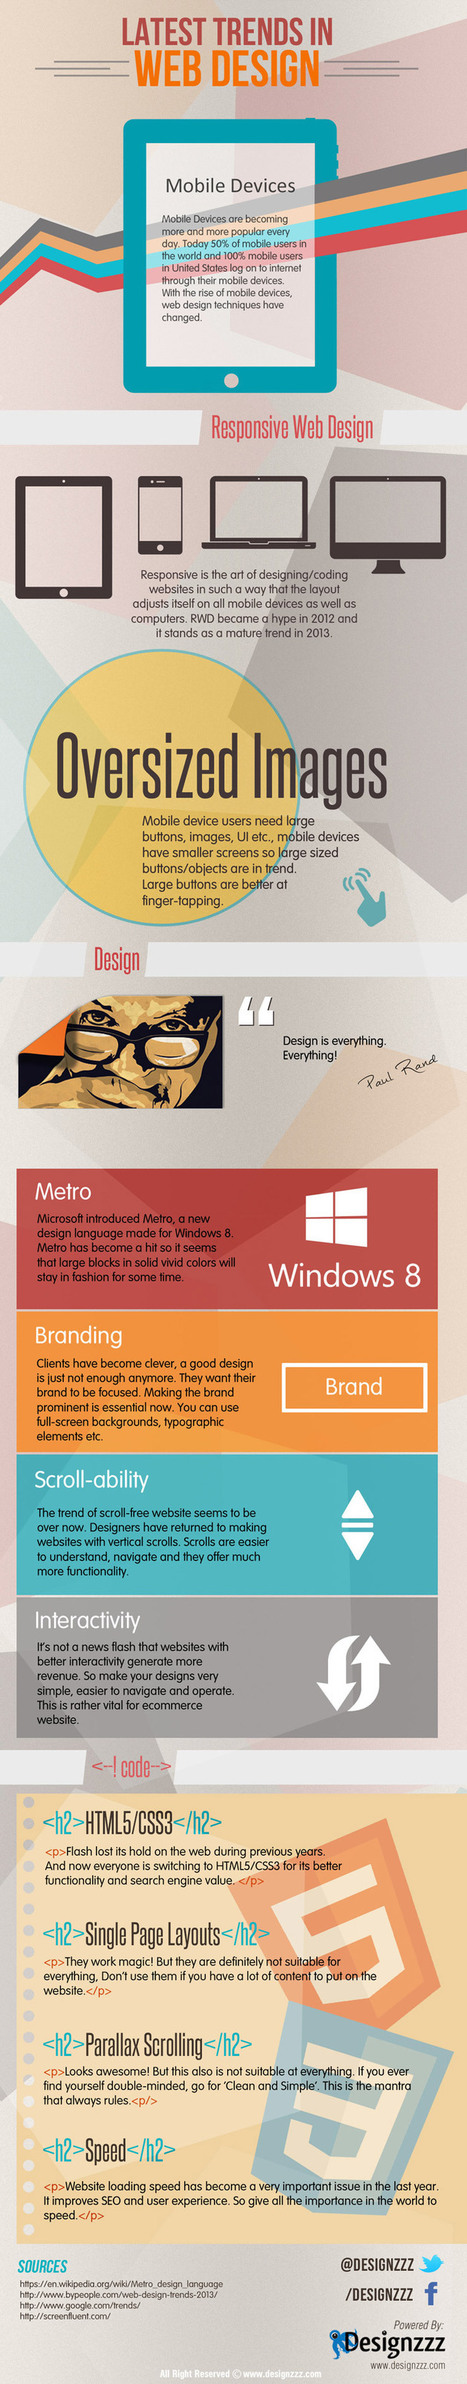 Latest Trends in Web Design [Infographic] | Must Design | Scoop.it